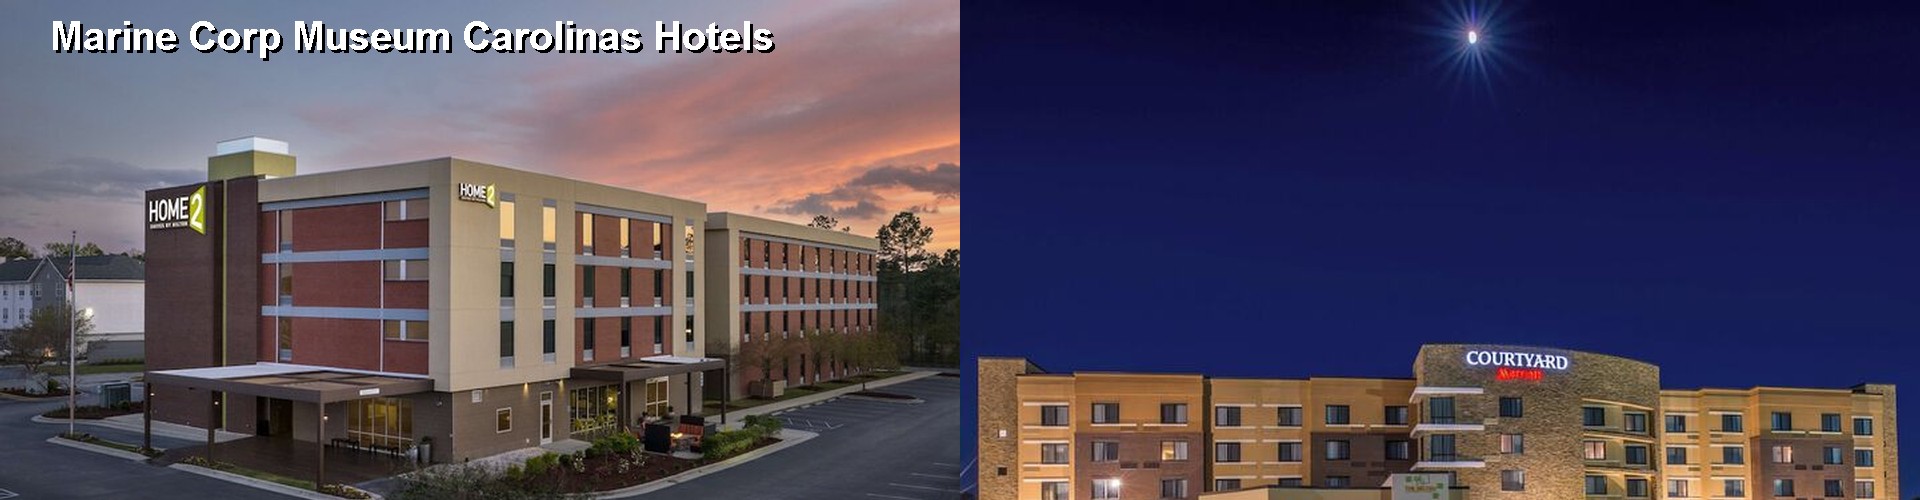 4 Best Hotels near Marine Corp Museum Carolinas